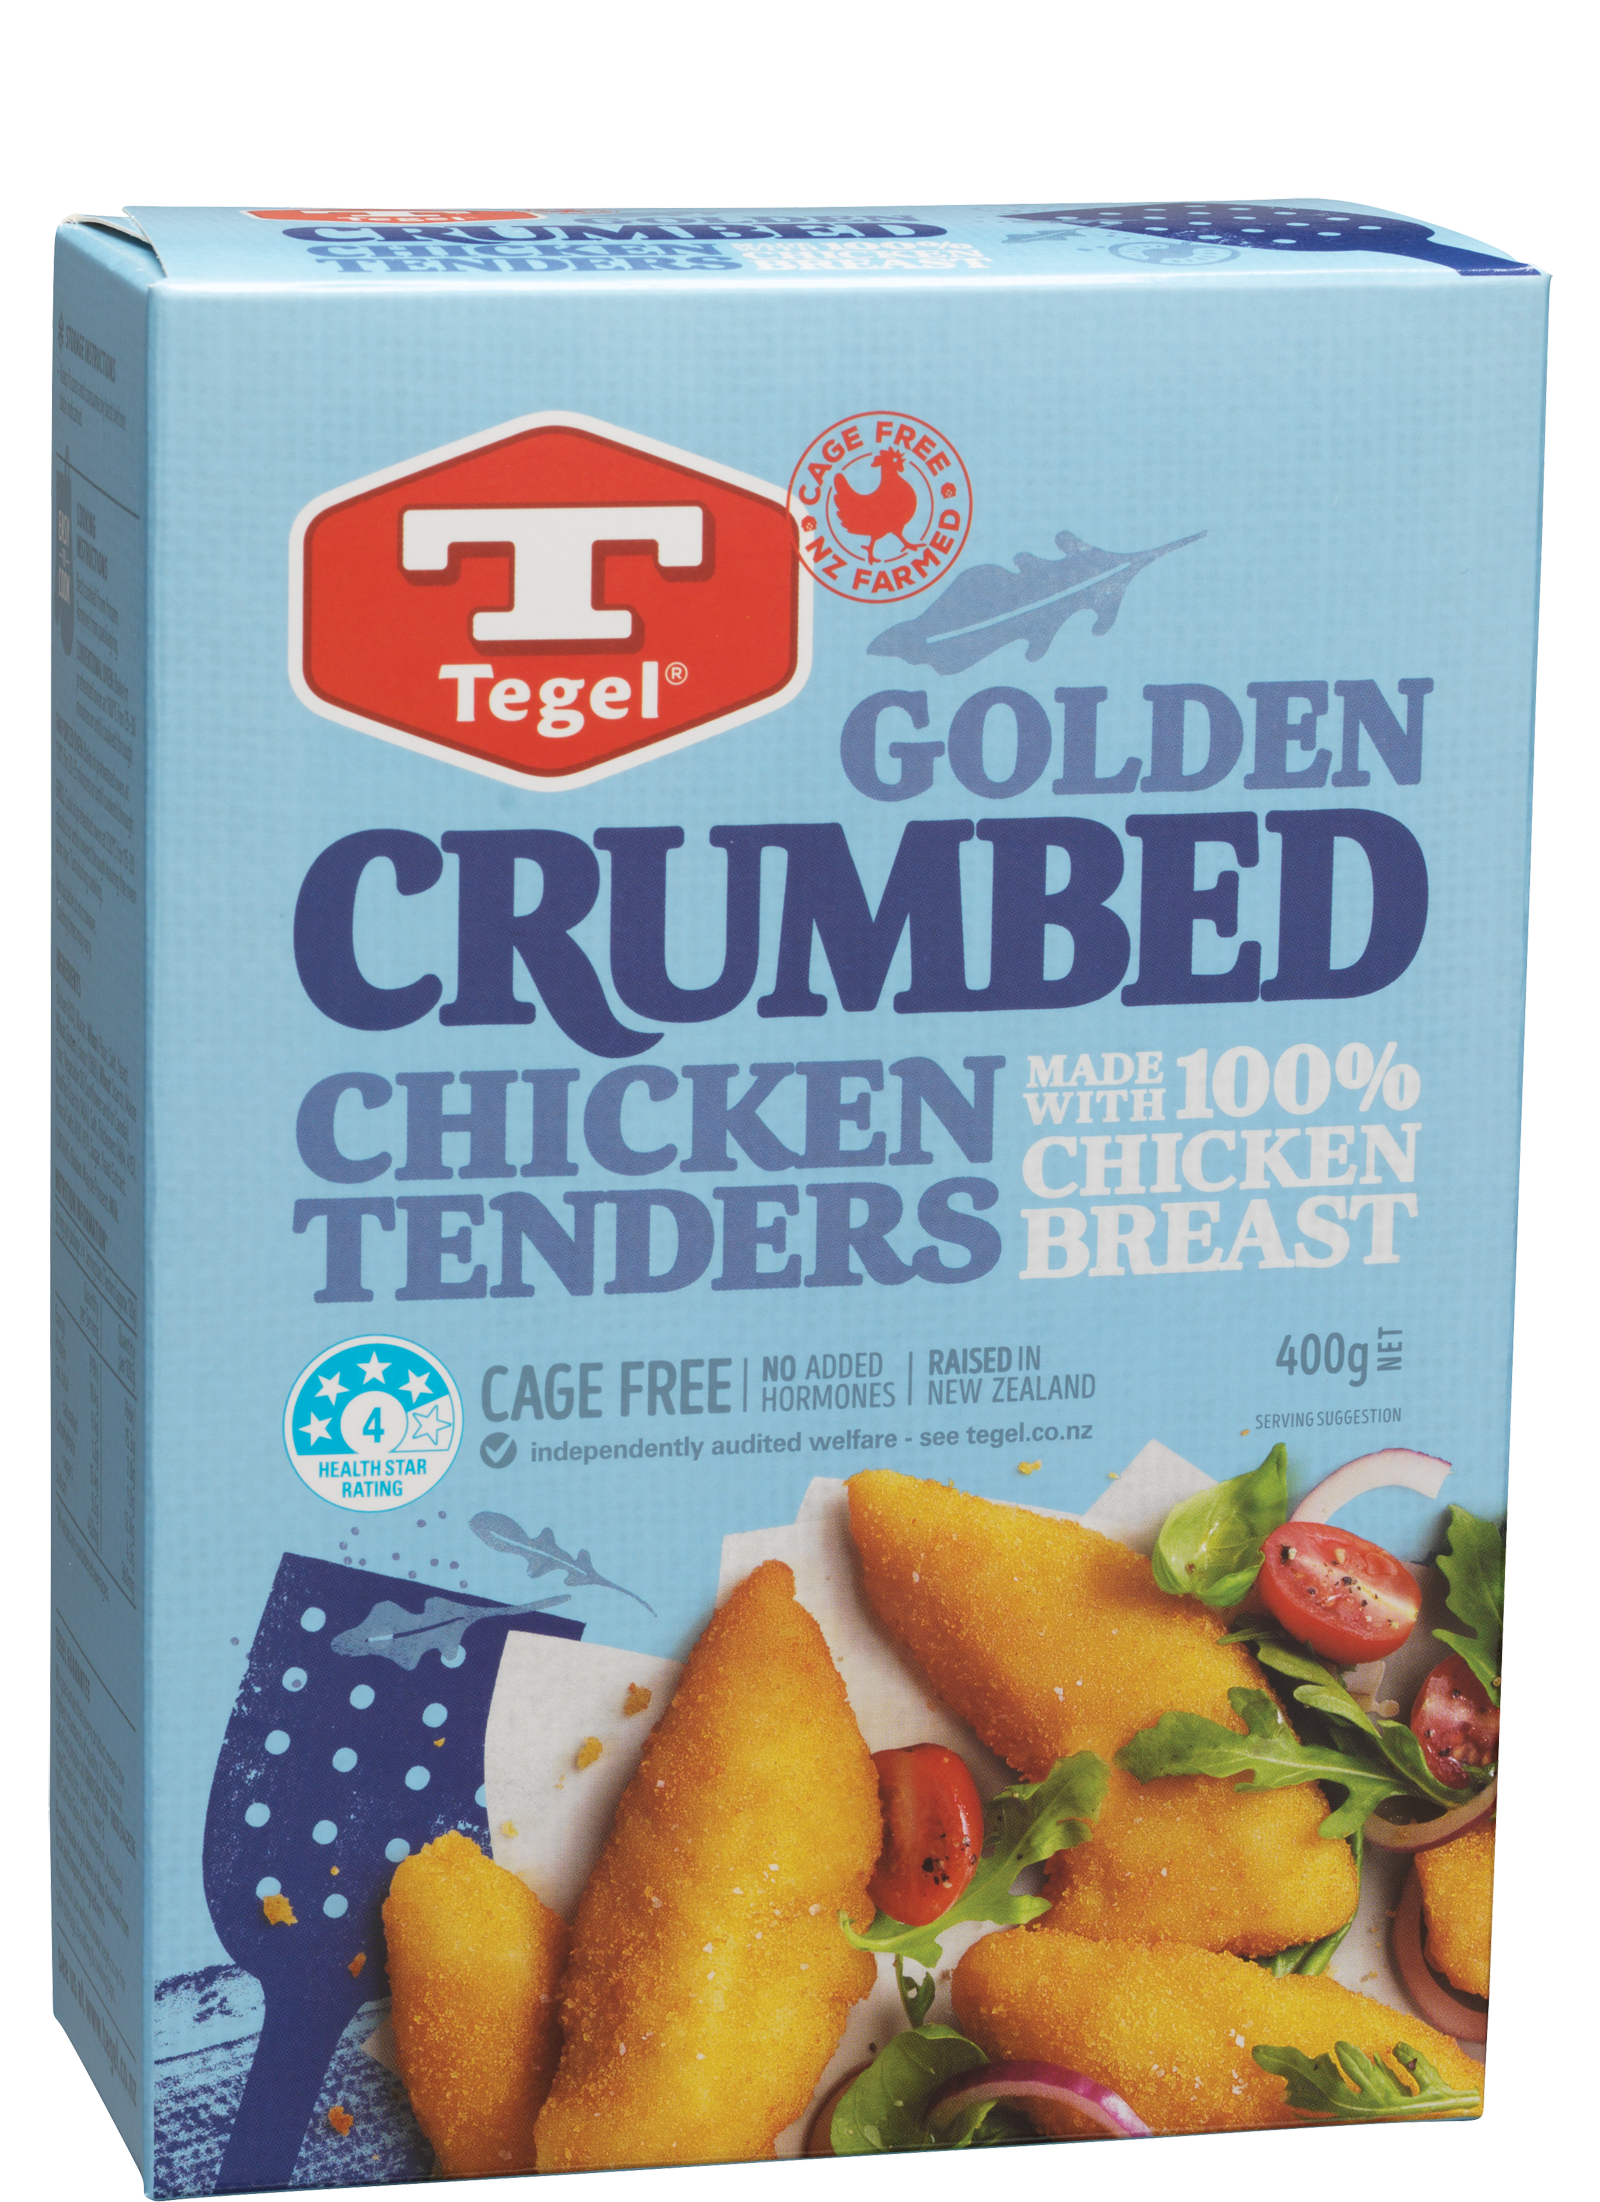 box of Tegel brand Golden Crumbed Chicken Tenders (400g)